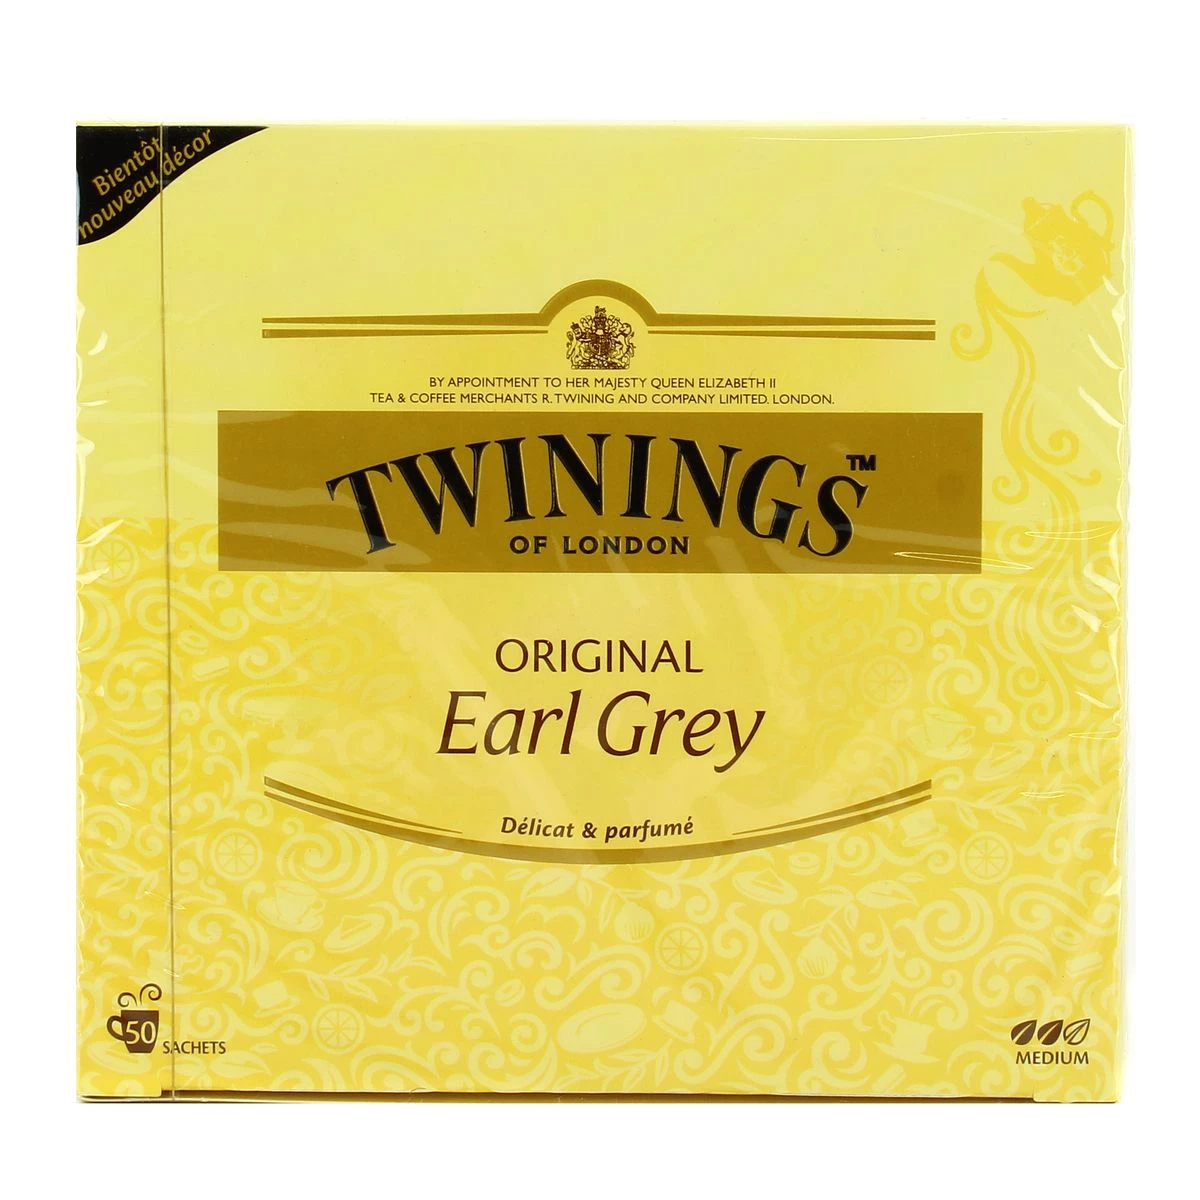 El Earl Grey original x50 100g - TWININGS